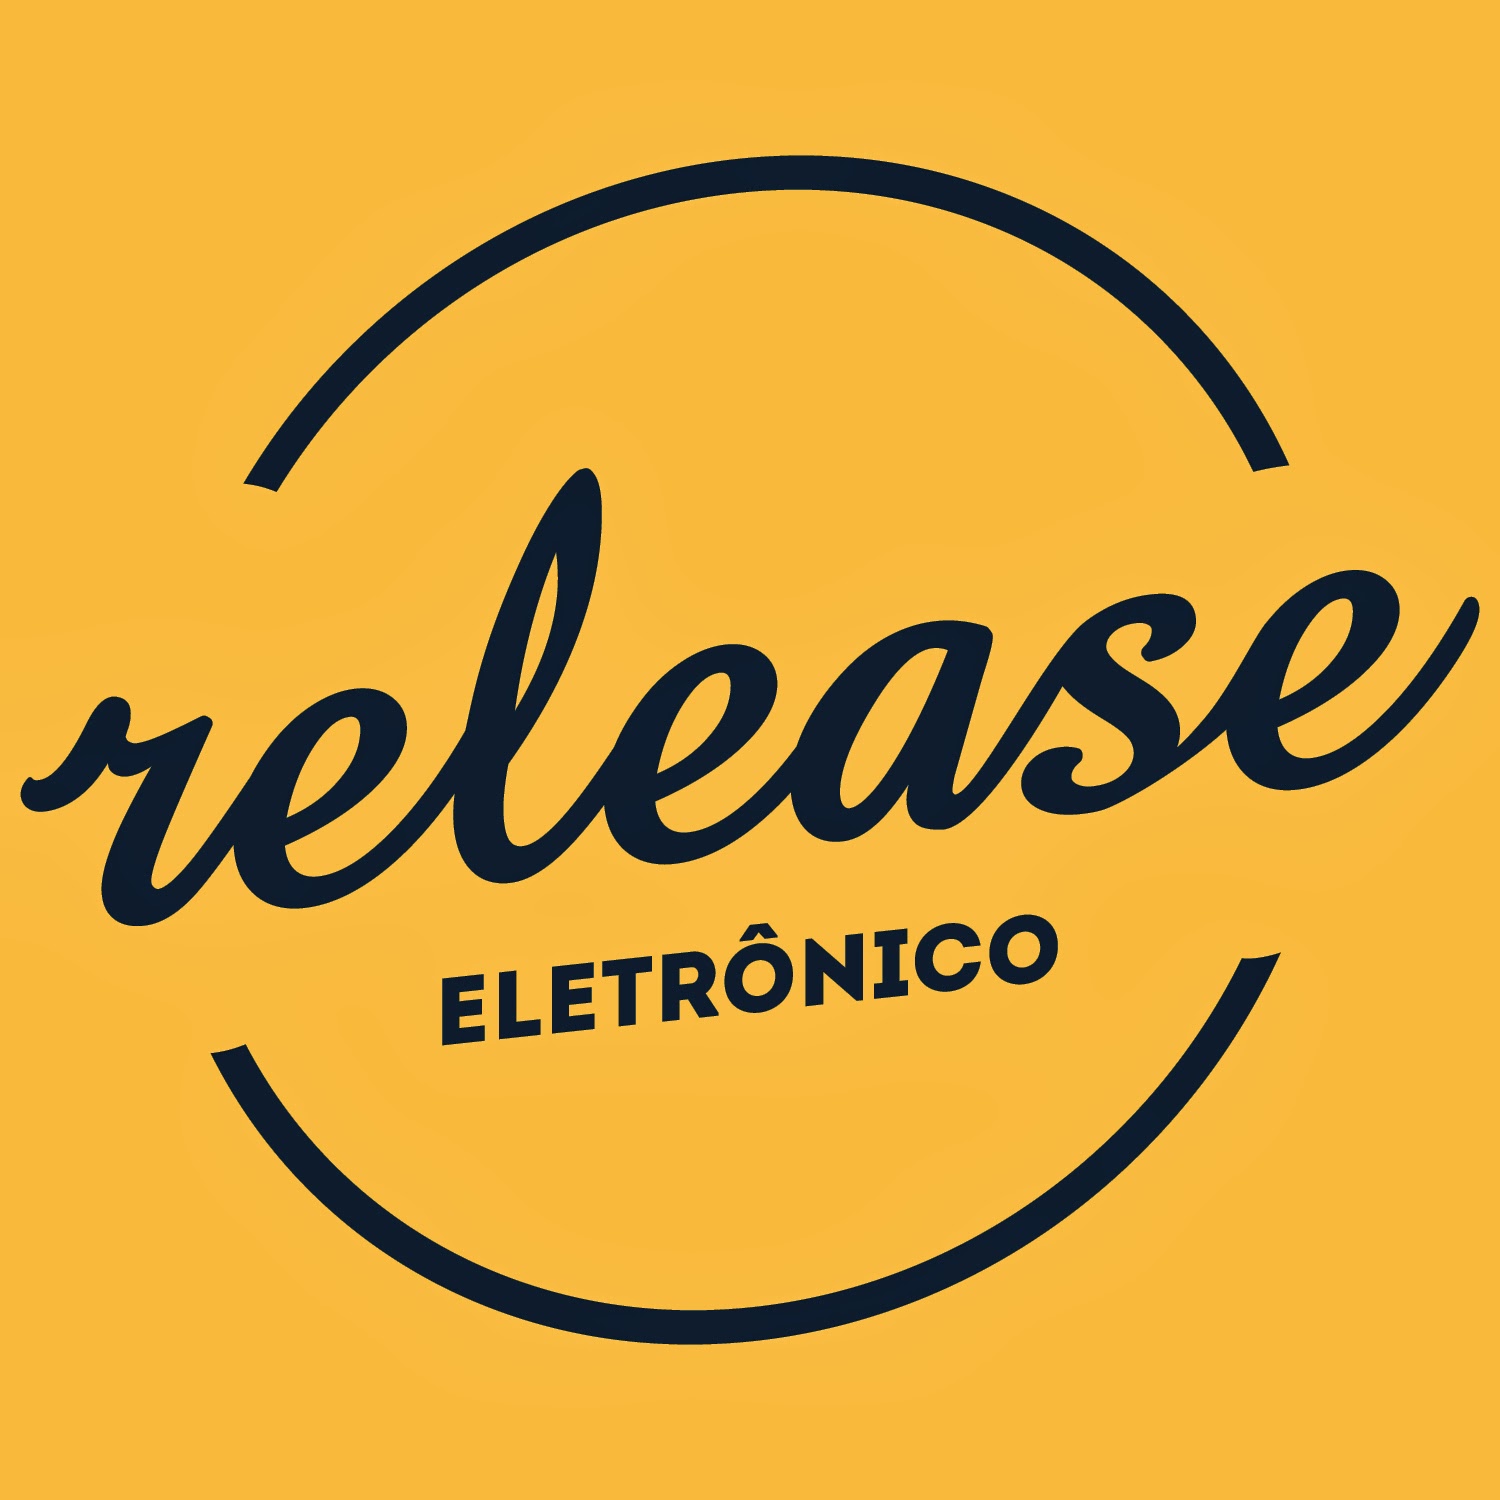 Release Eletrônico